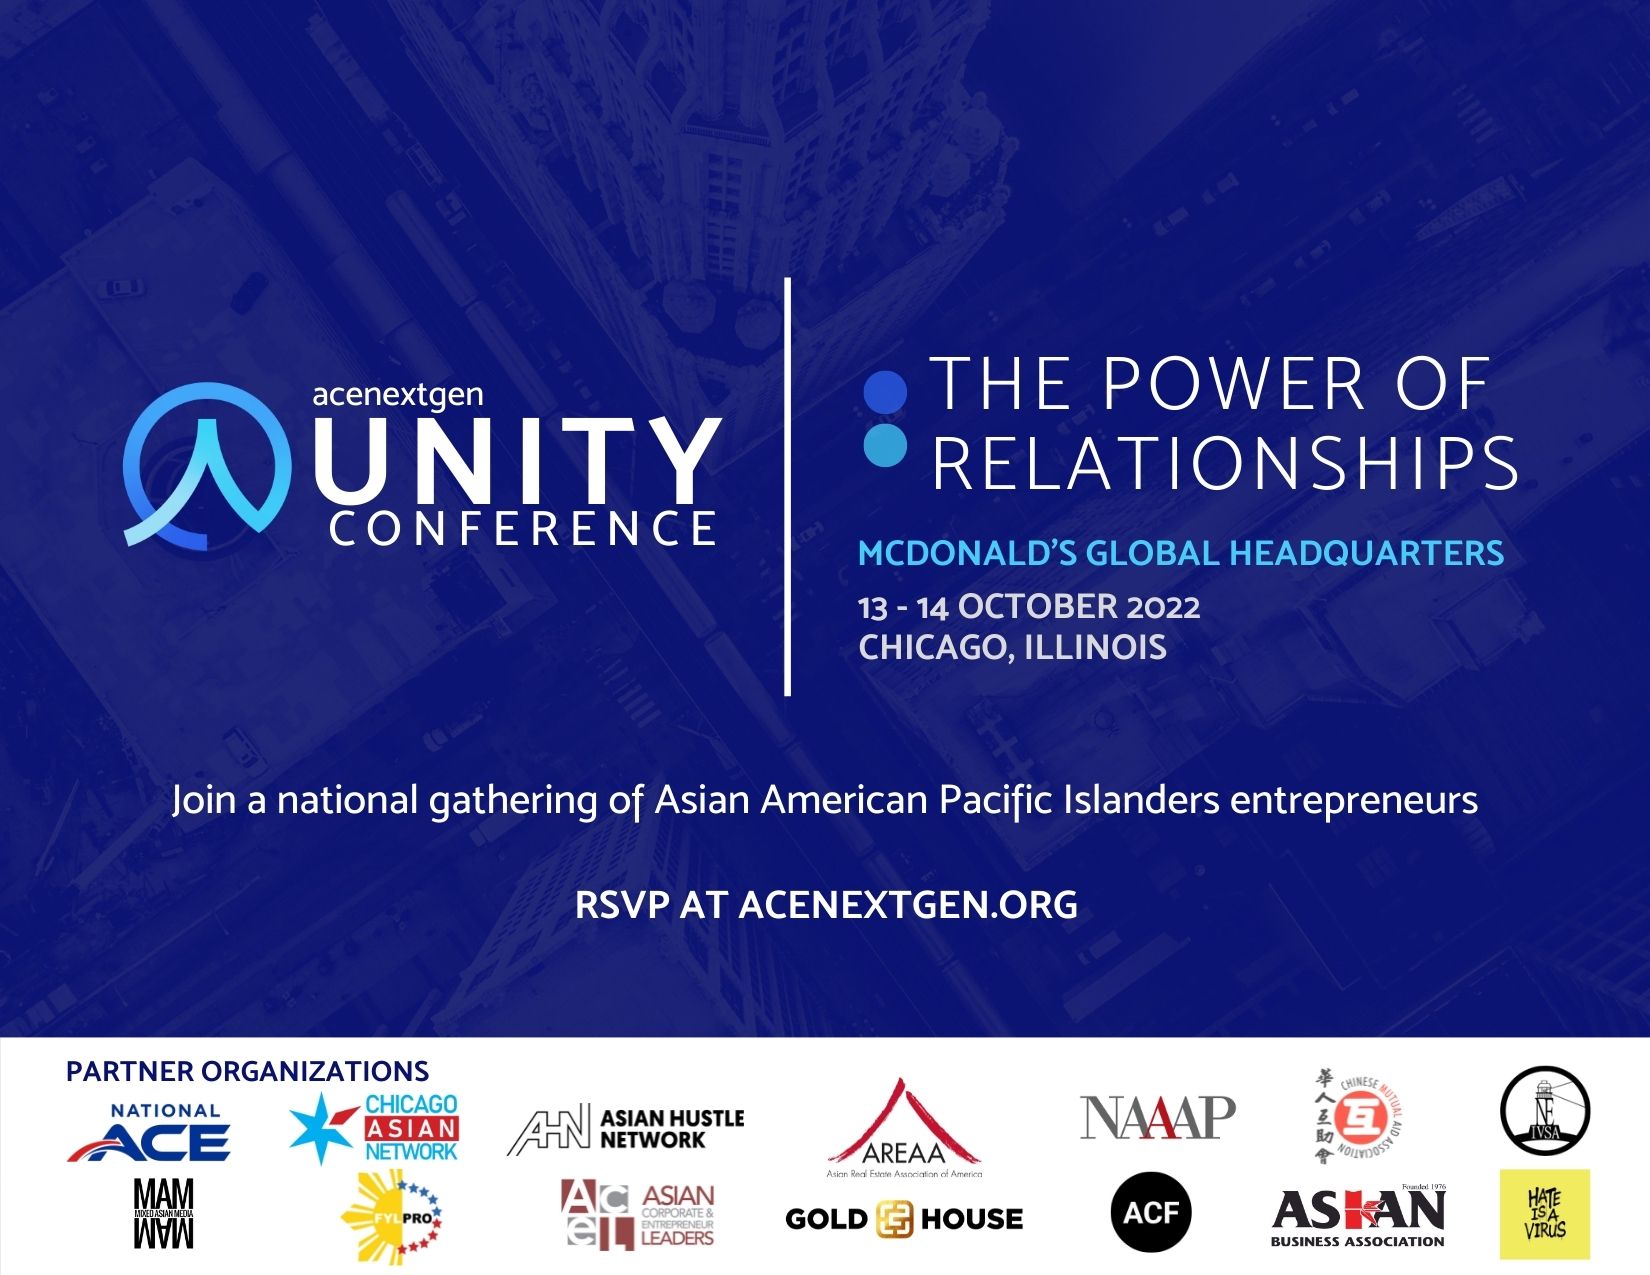 ACE NextGen Unity Conference National Association of Asian American